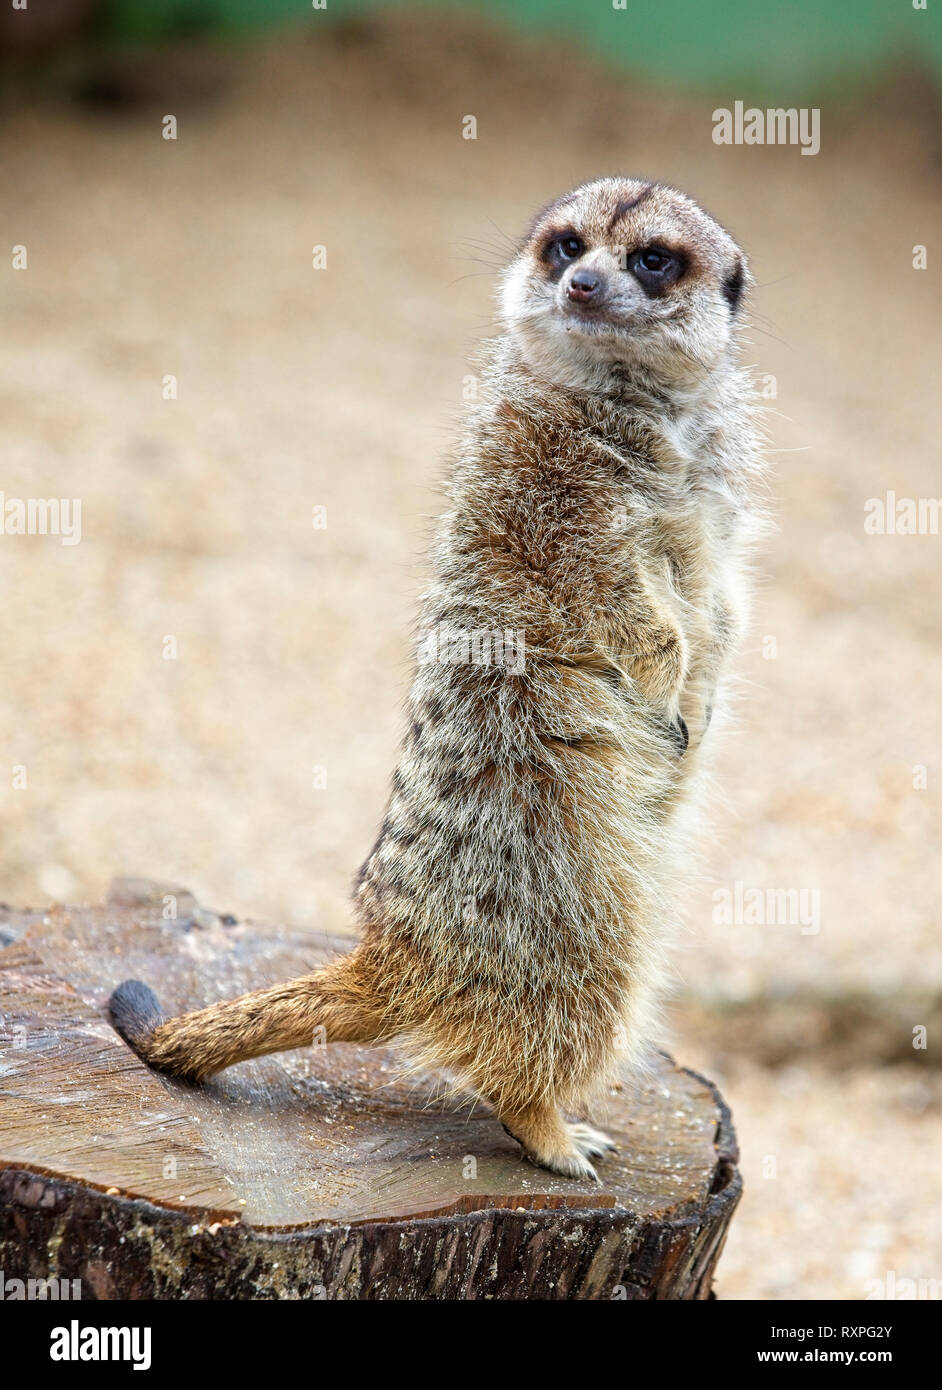 Meerkat or Suricate (Suricata suricatta), captive animal, standing on a tree stump. Stock Photo